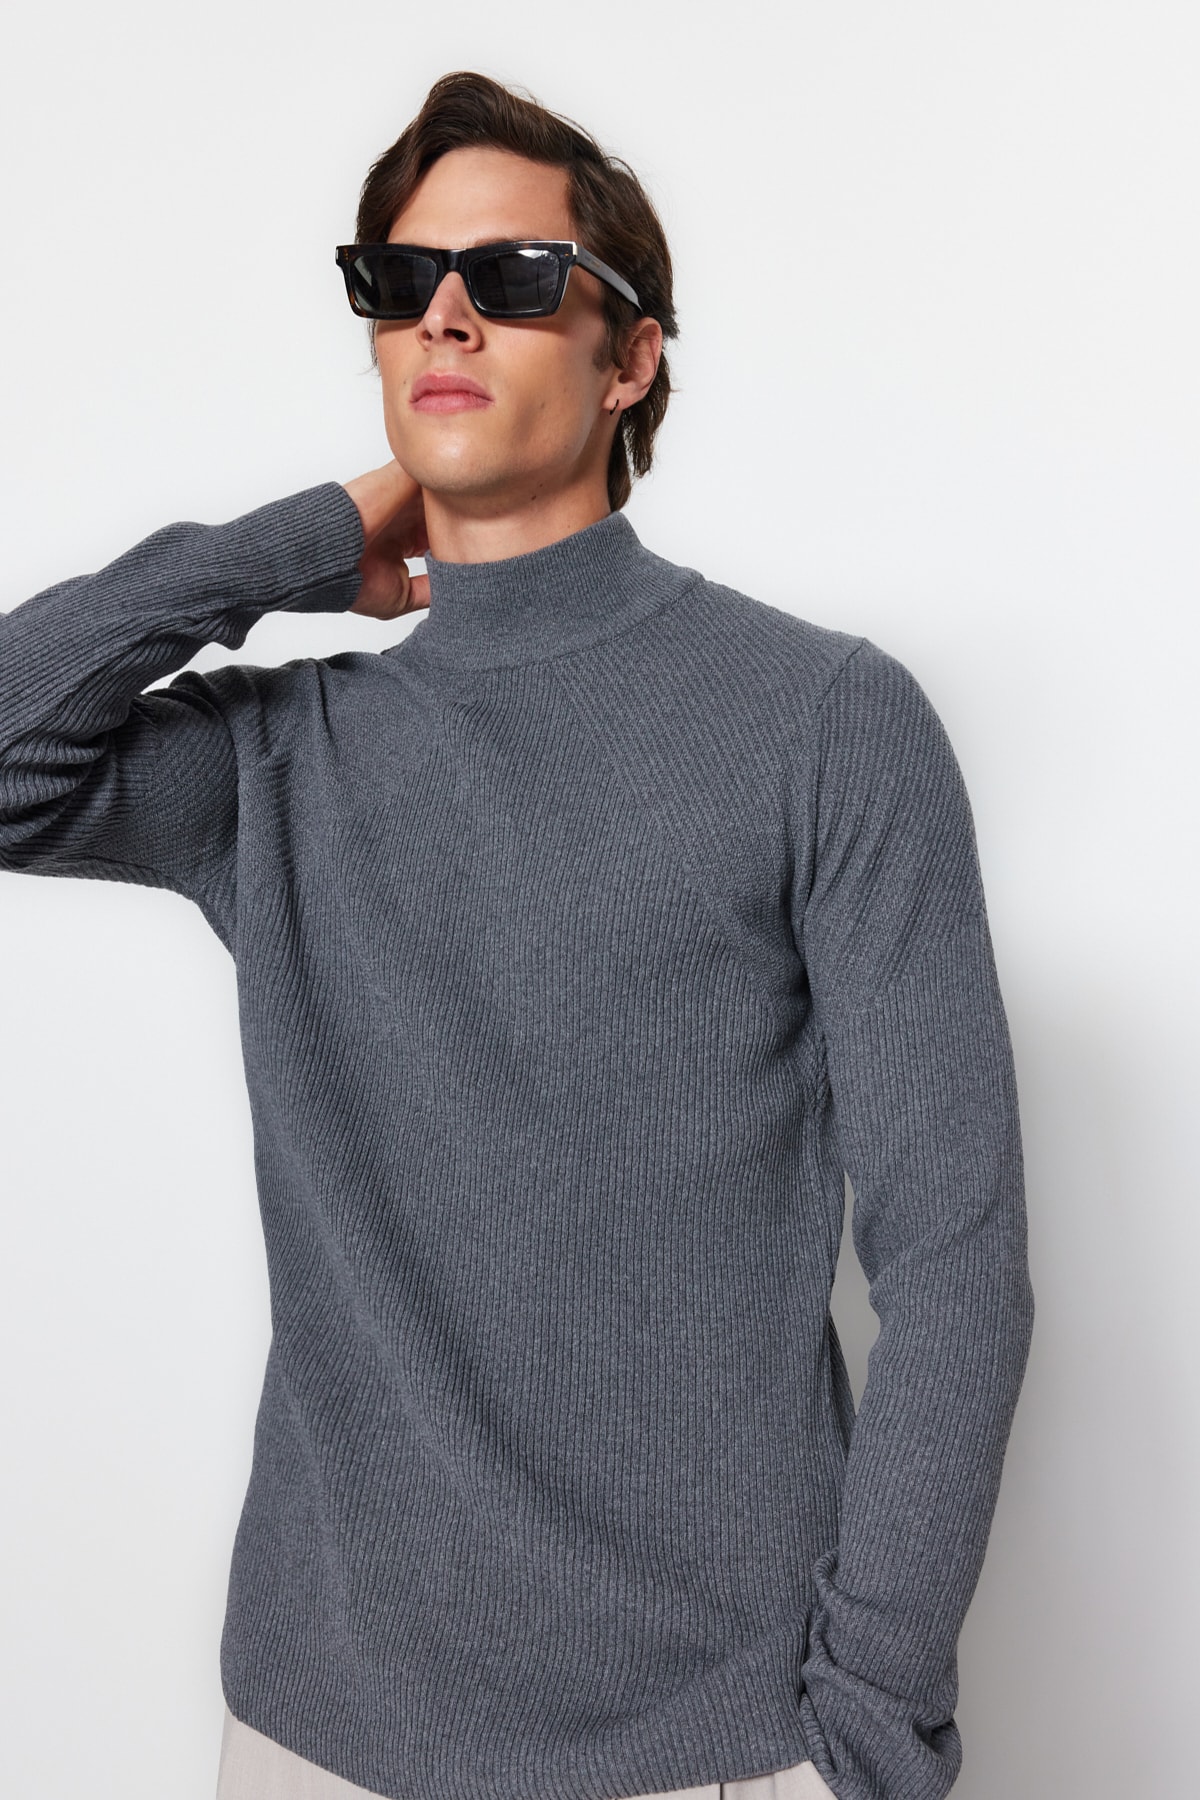 Trendyol Dark Gray Men's Fitted Tight Fit Half Turtleneck Corduroy Knitwear Sweater